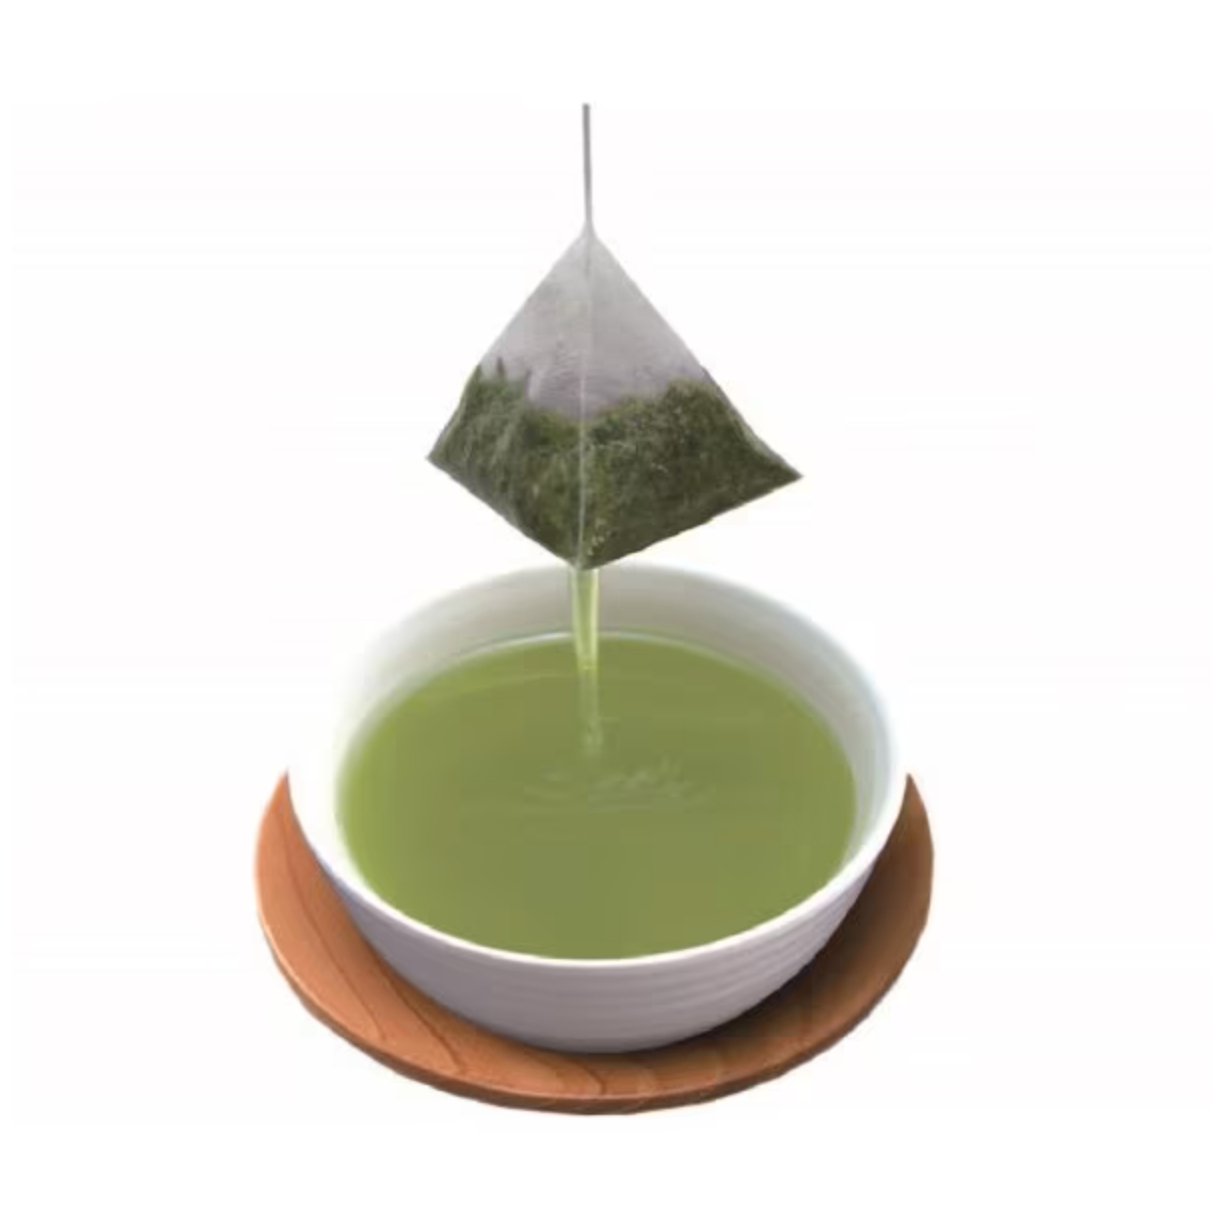 Kunitaro Chiran tea with matcha triangular tea bags 40 bags 80g - NihonMura